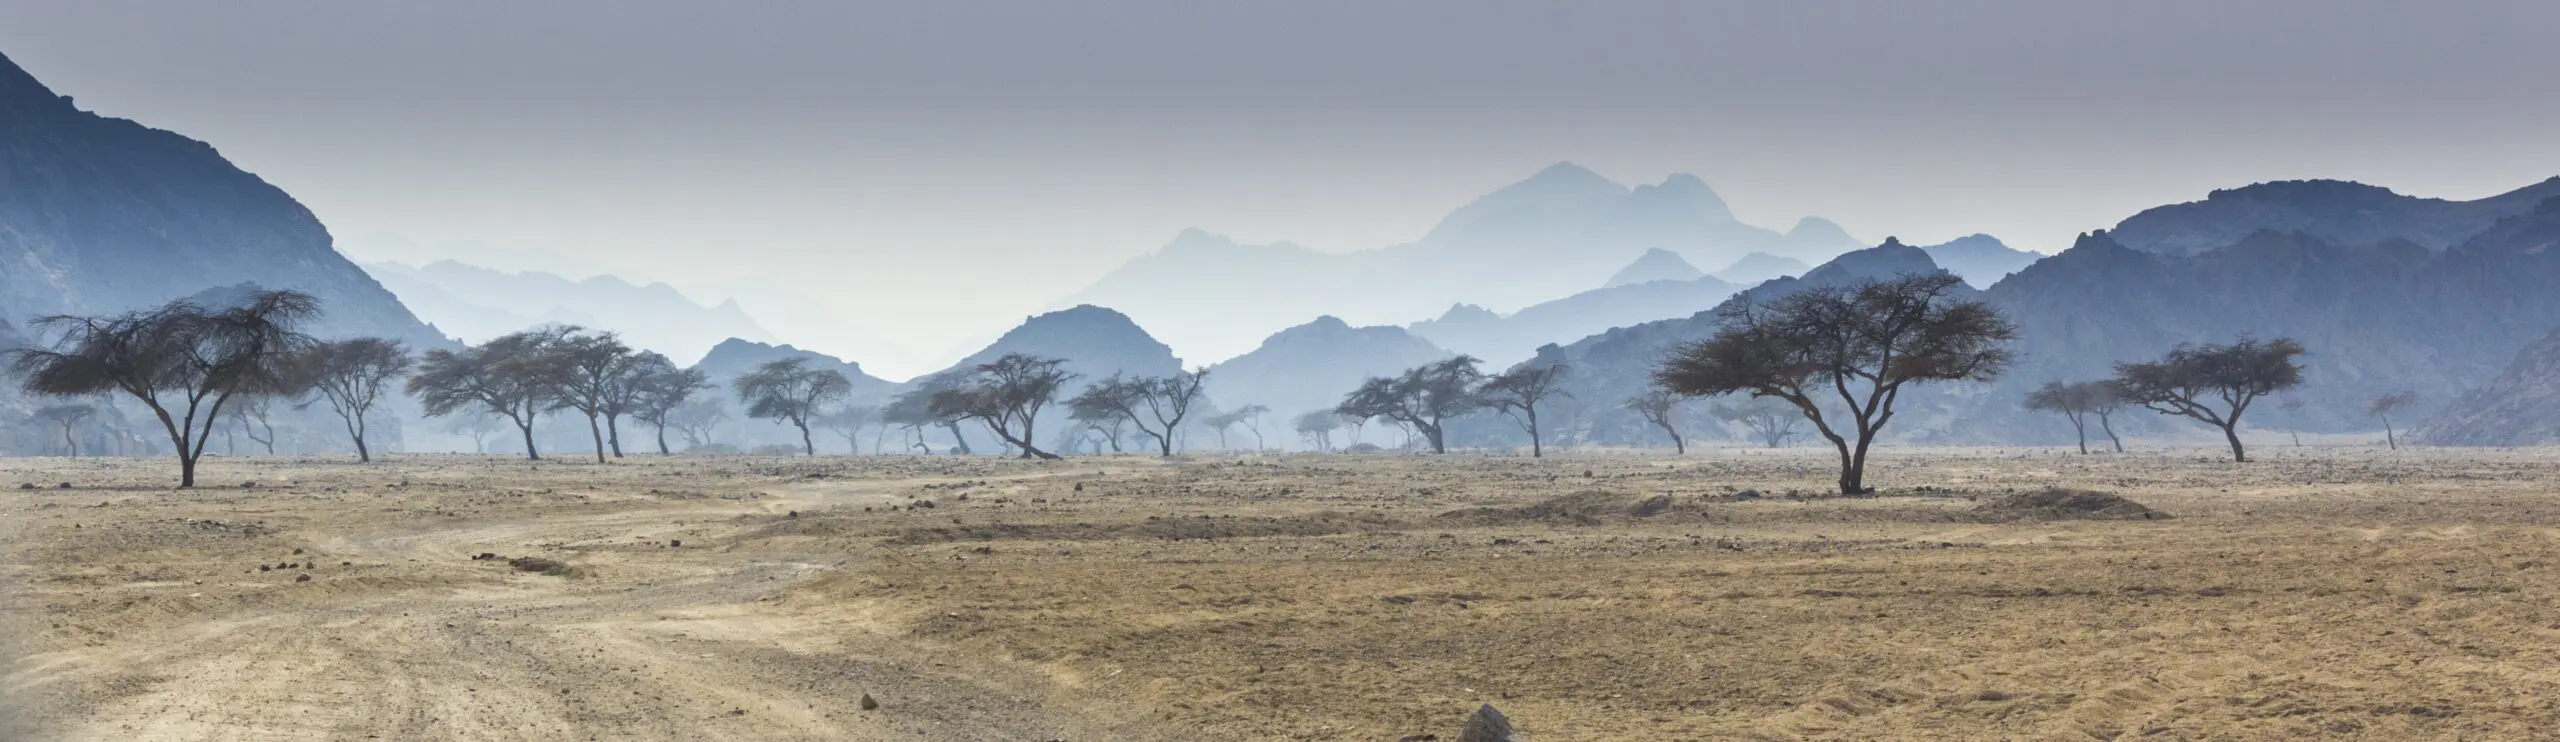 Wandbild (4590) Bortoli Manfred – Wadi el Gamal präsentiert: Natur,Landschaften,Bäume,Afrika,Wüste,Berge